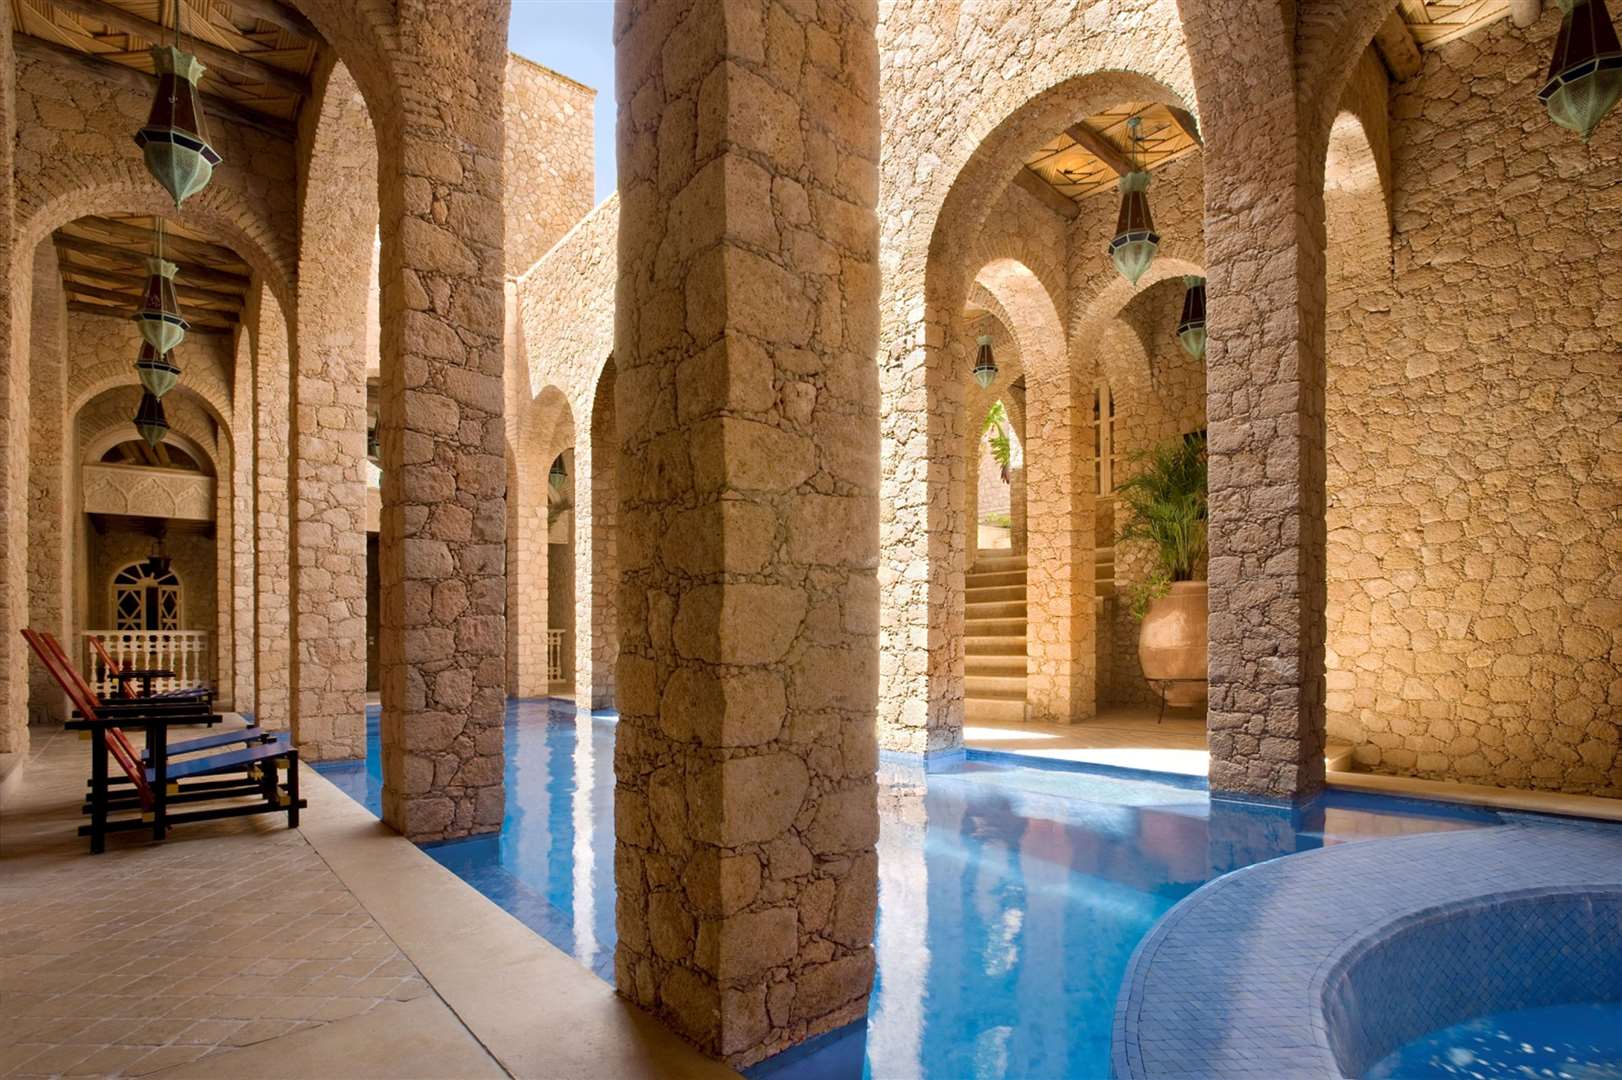 La Sultana Oualidia's indoor pool and spa. Picture: La Sultana/PA